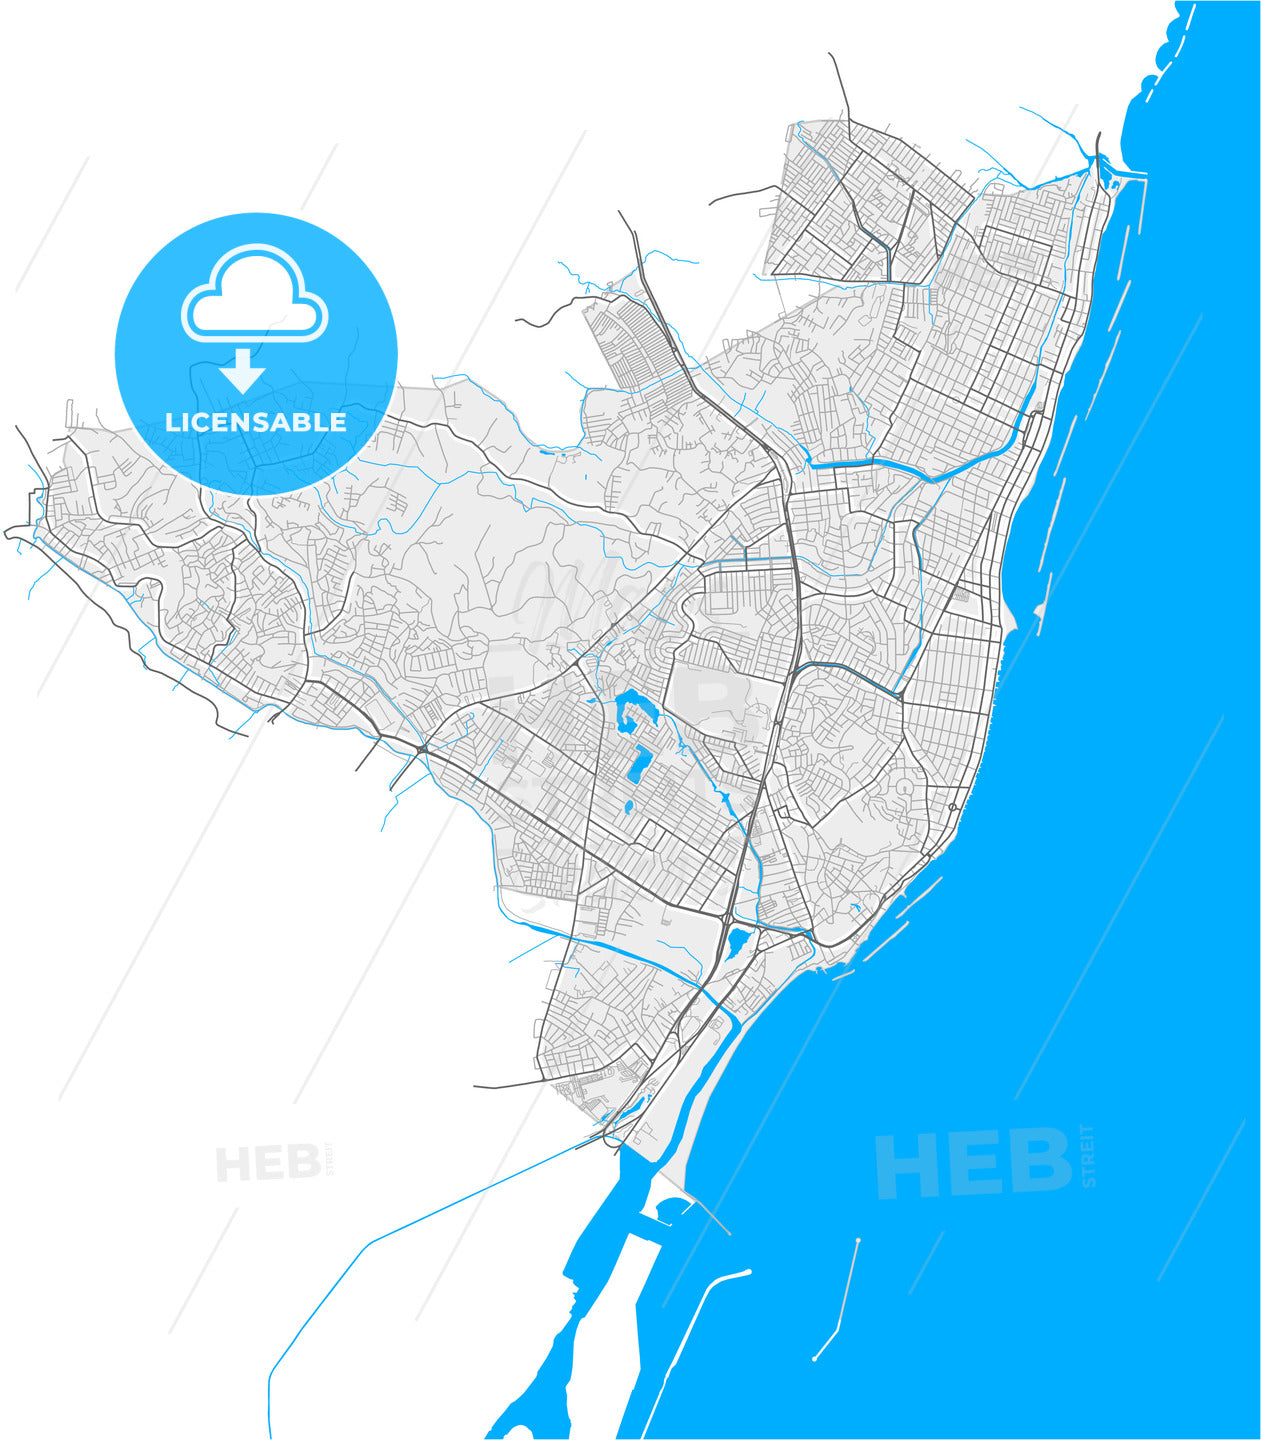 Olinda, Brazil, high quality vector map